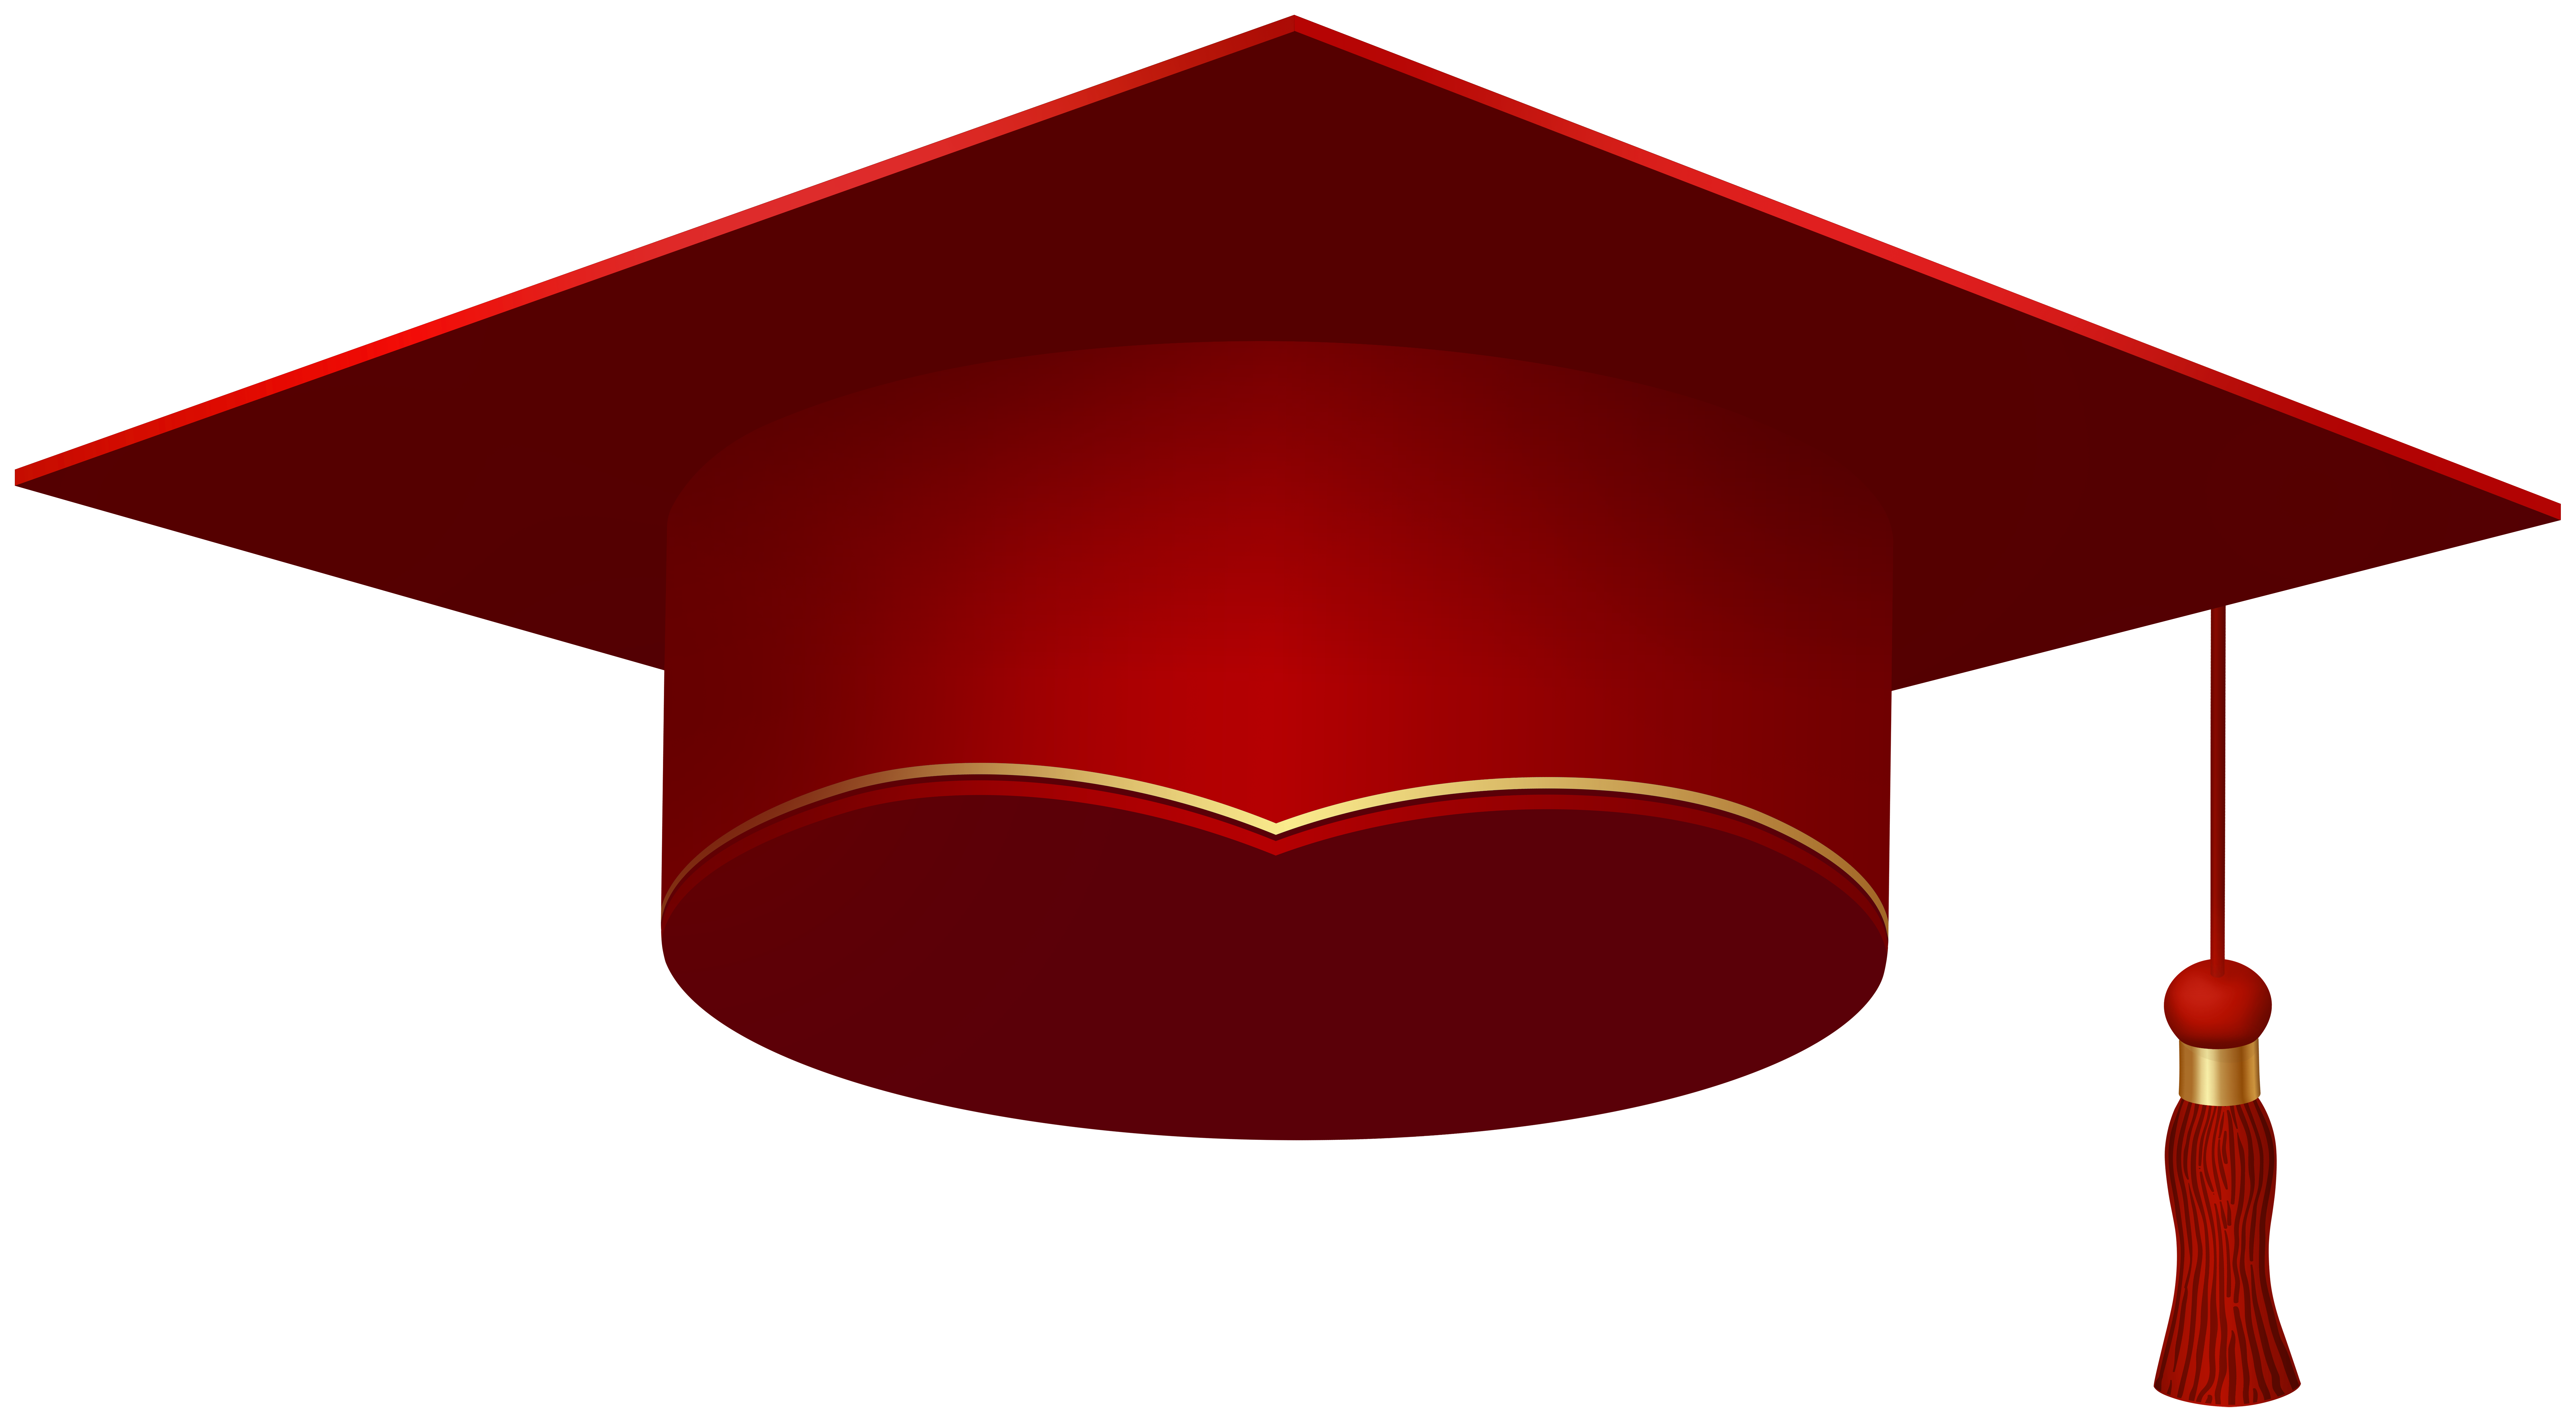 Diploma Red Graduation Cap Clipart | peacecommission.kdsg.gov.ng